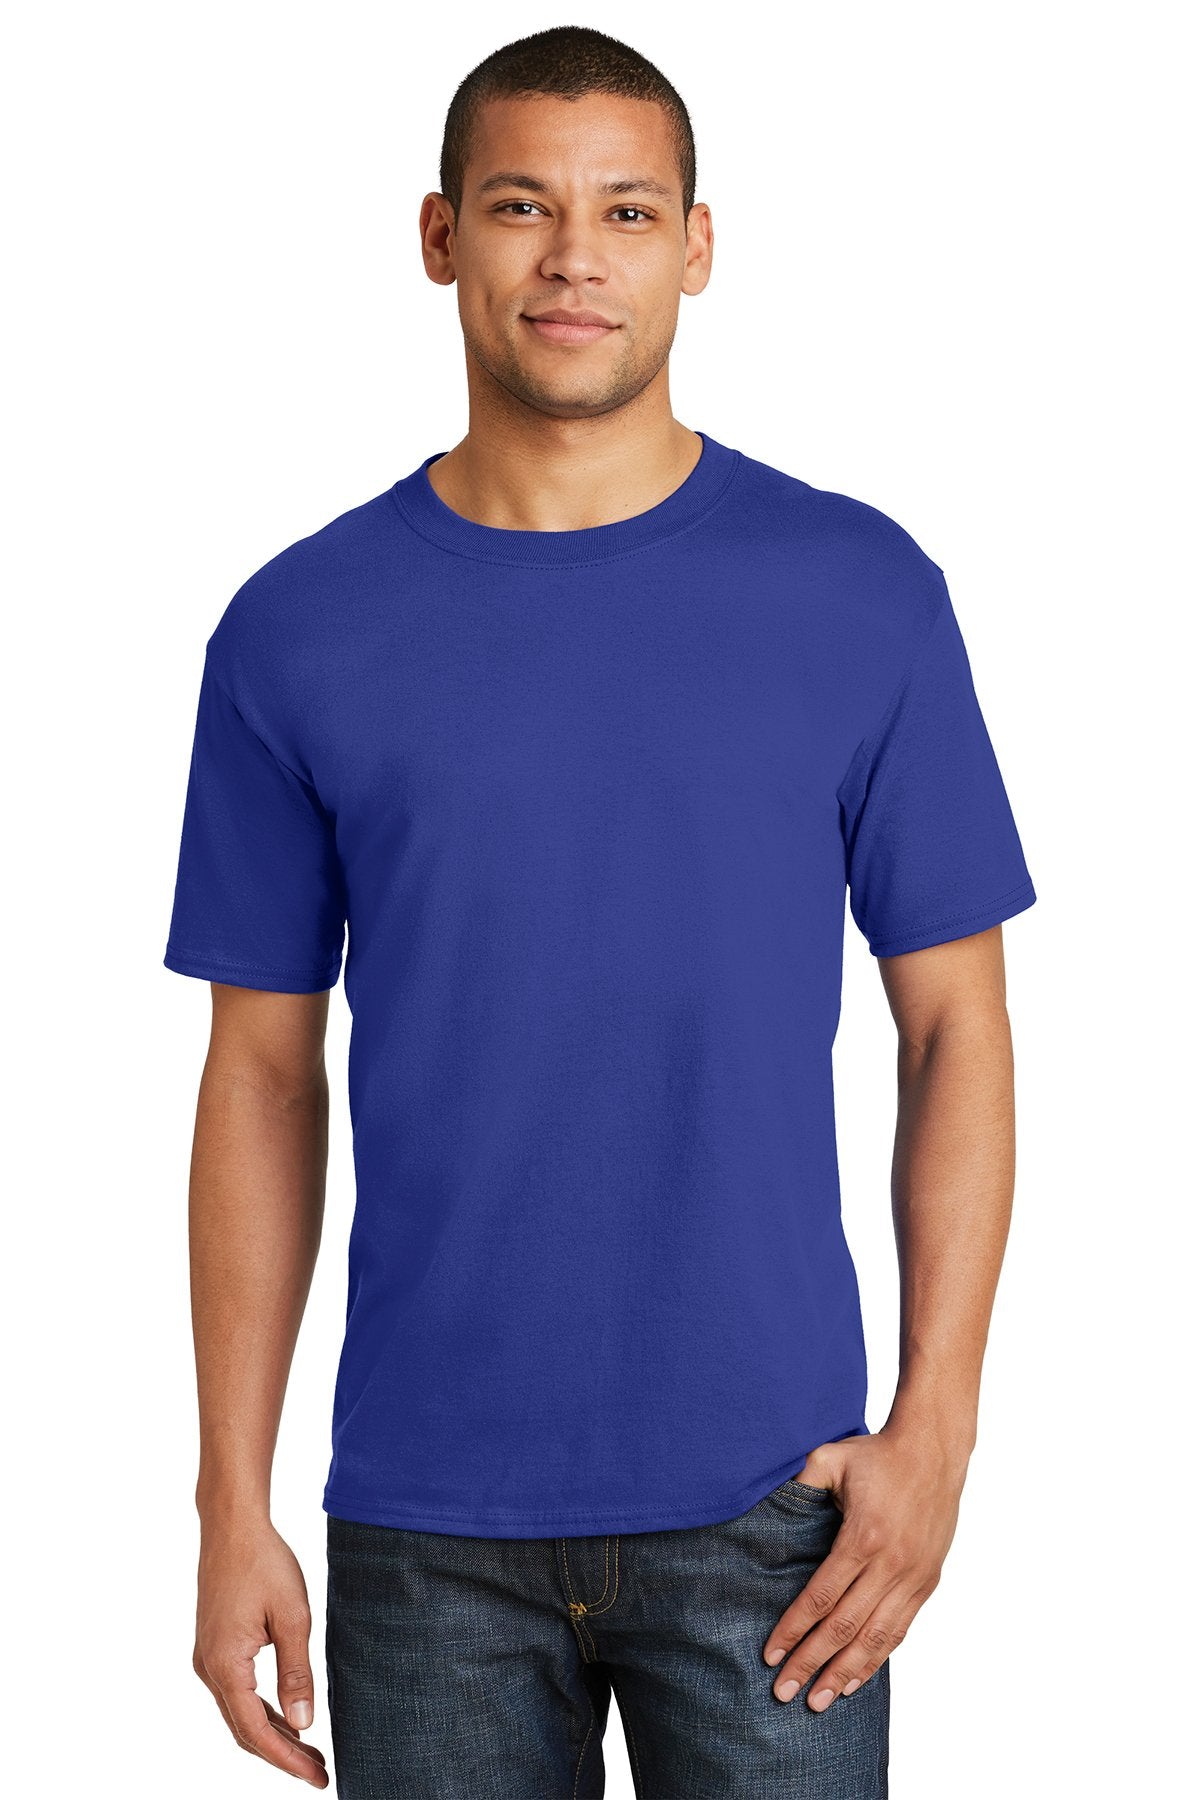 Hanes Beefy Cotton T Shirt in Deep Royal, add a custom design